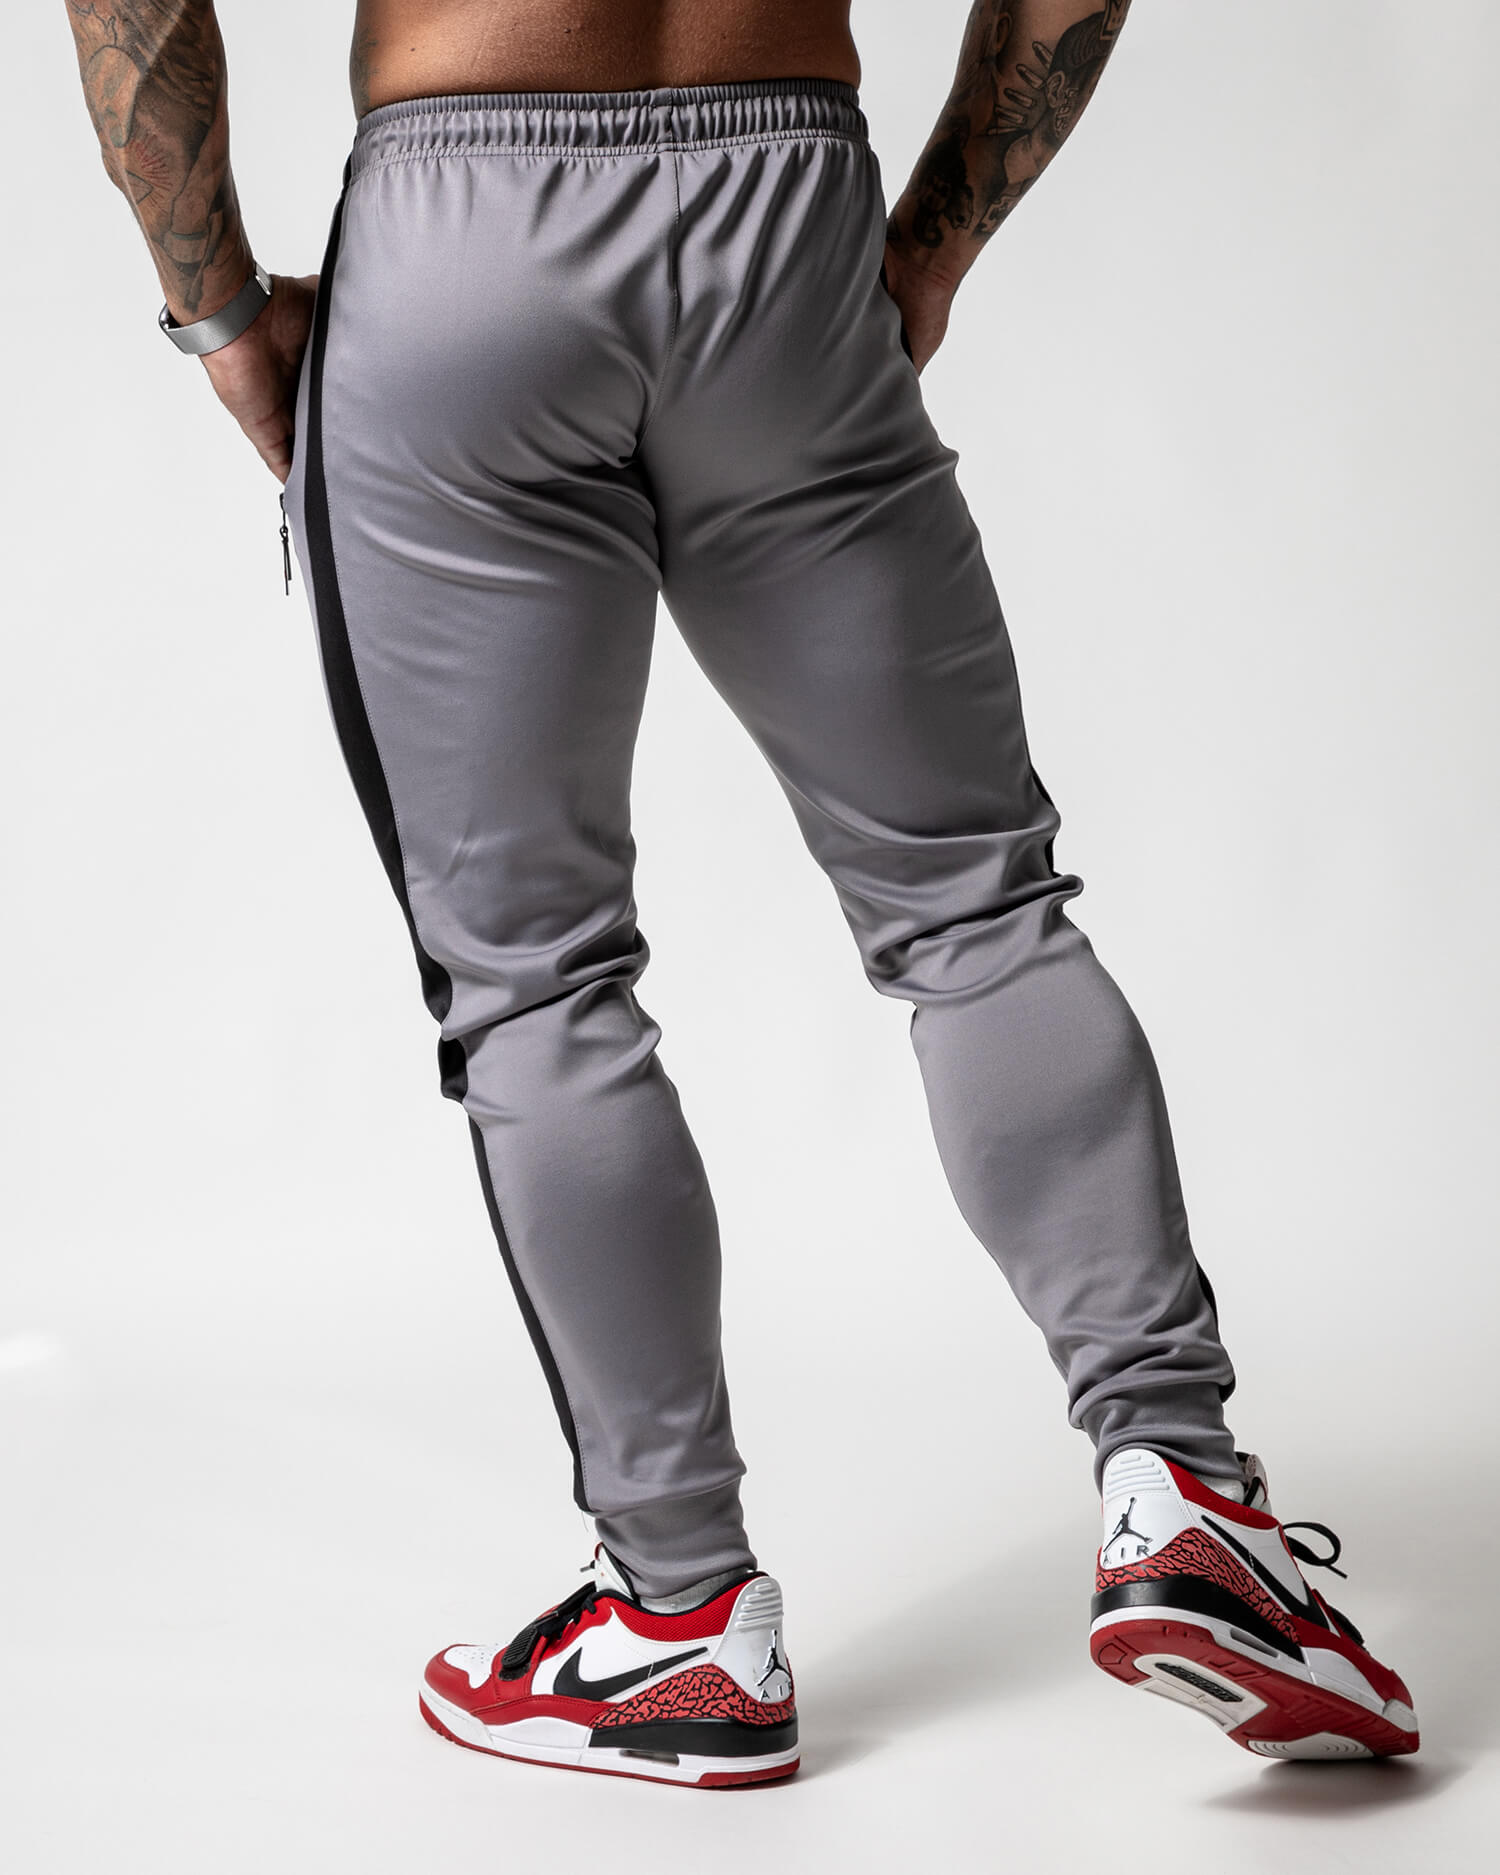 MNX Men's track pants, grey - MNX Sportswear